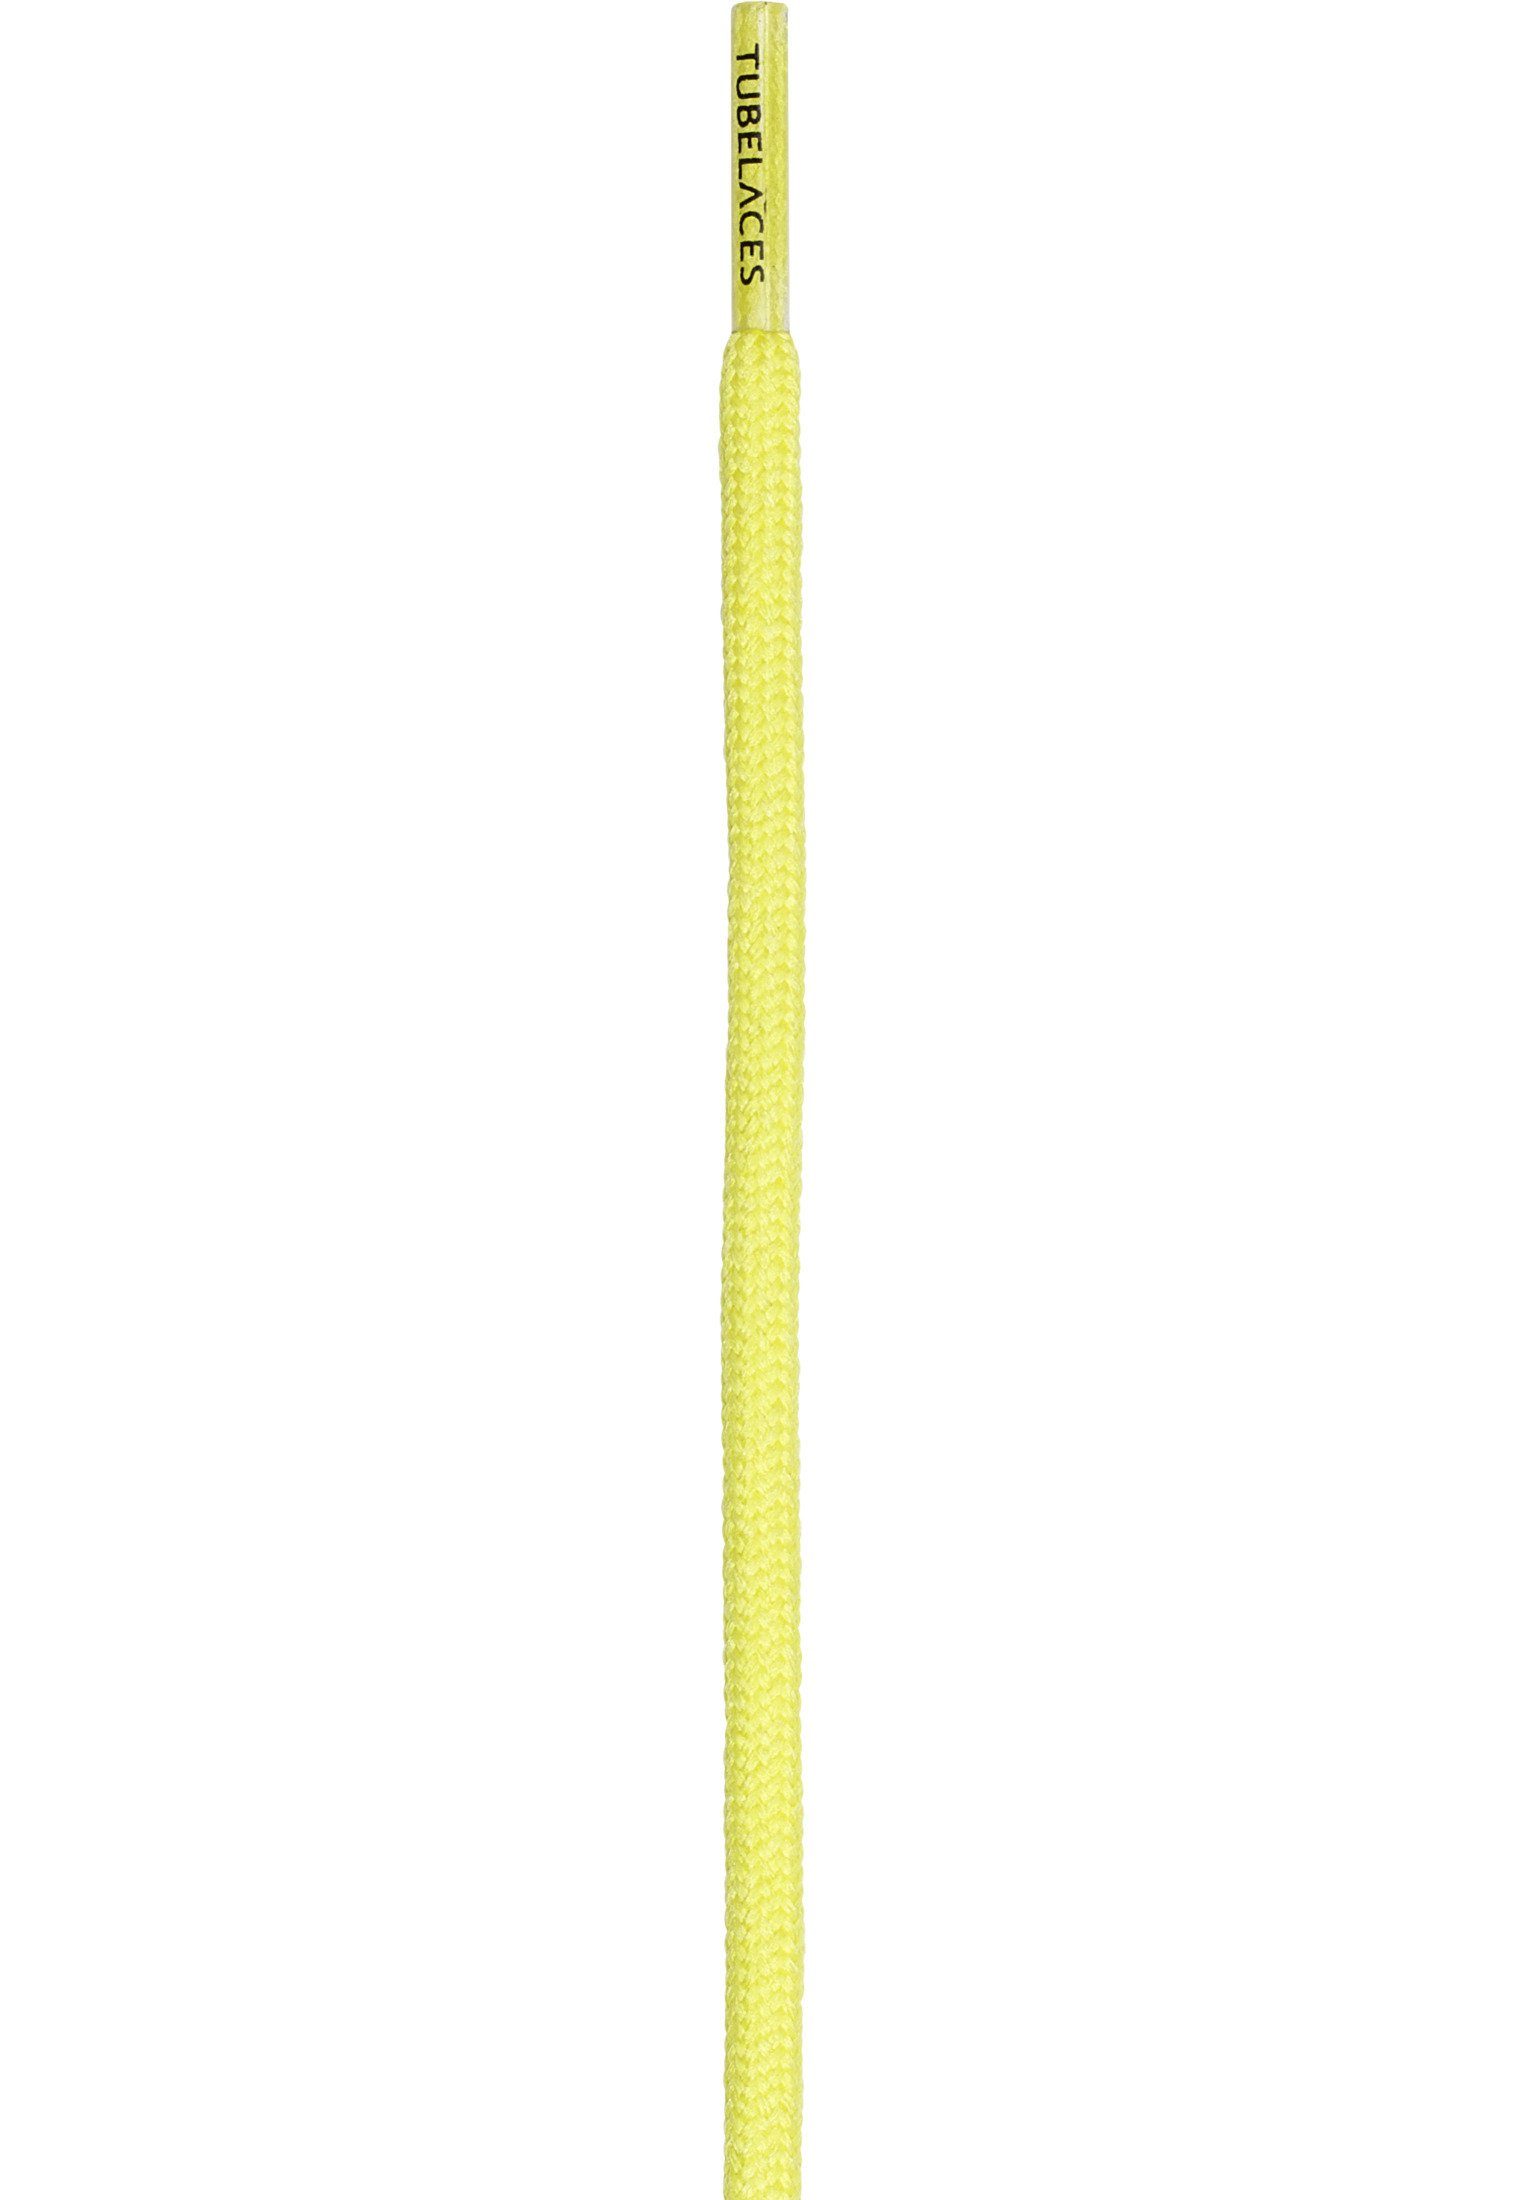 Schnürsenkel Rope Solid neonyellow Accessoires Tubelaces